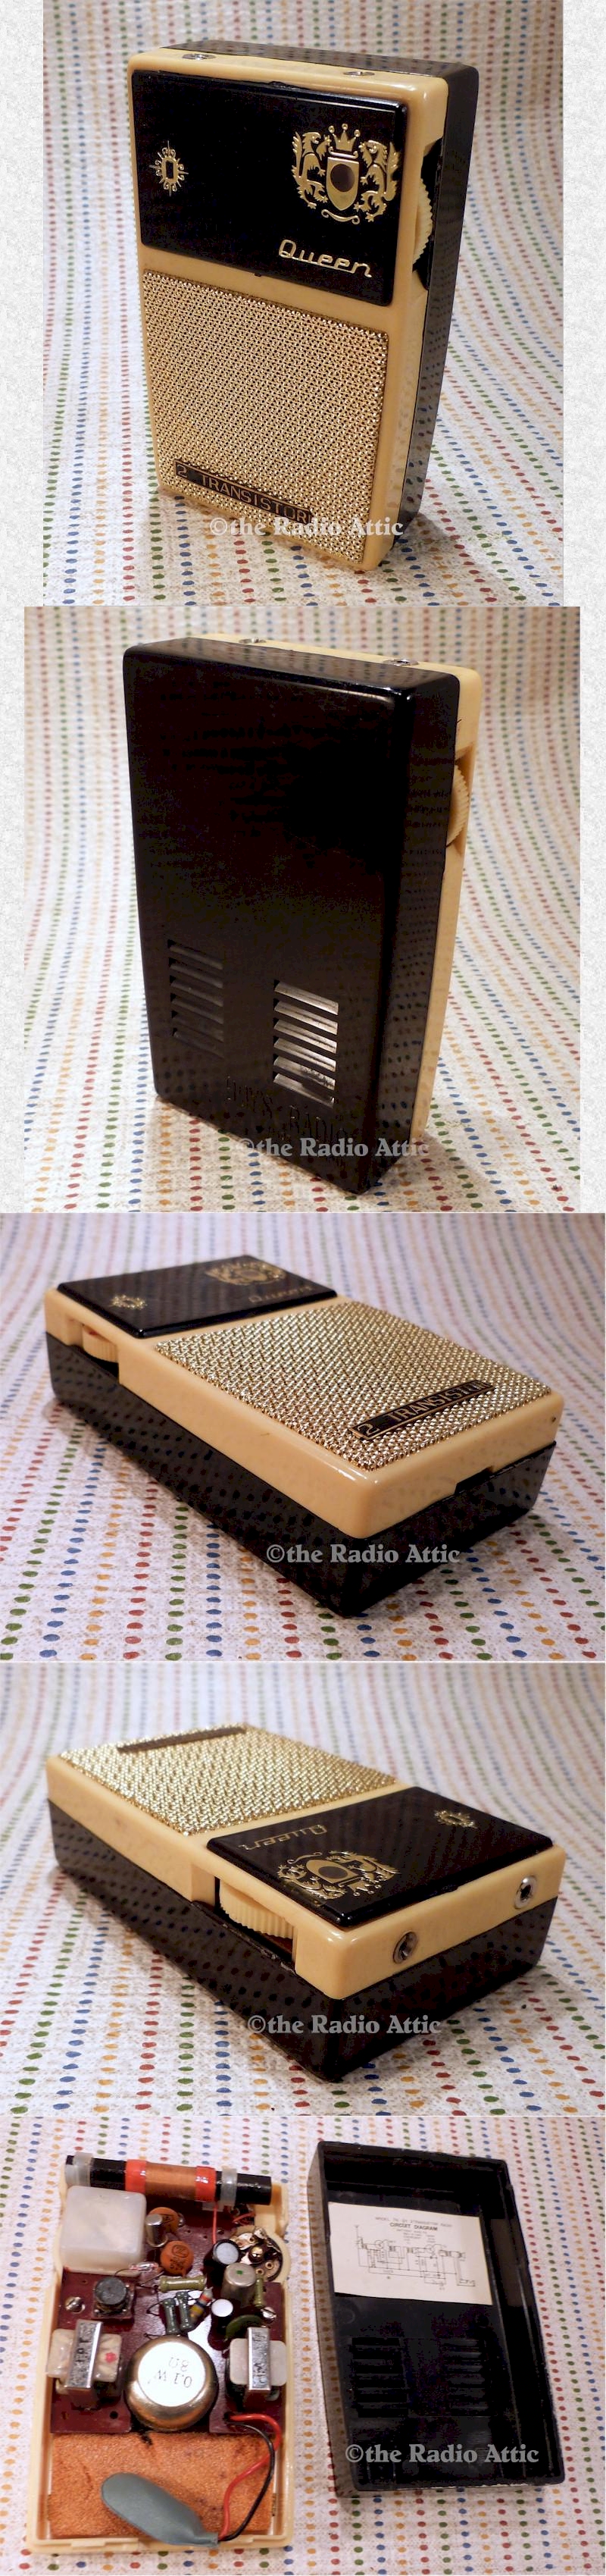 Queen TN-20  "Boy's Radio"